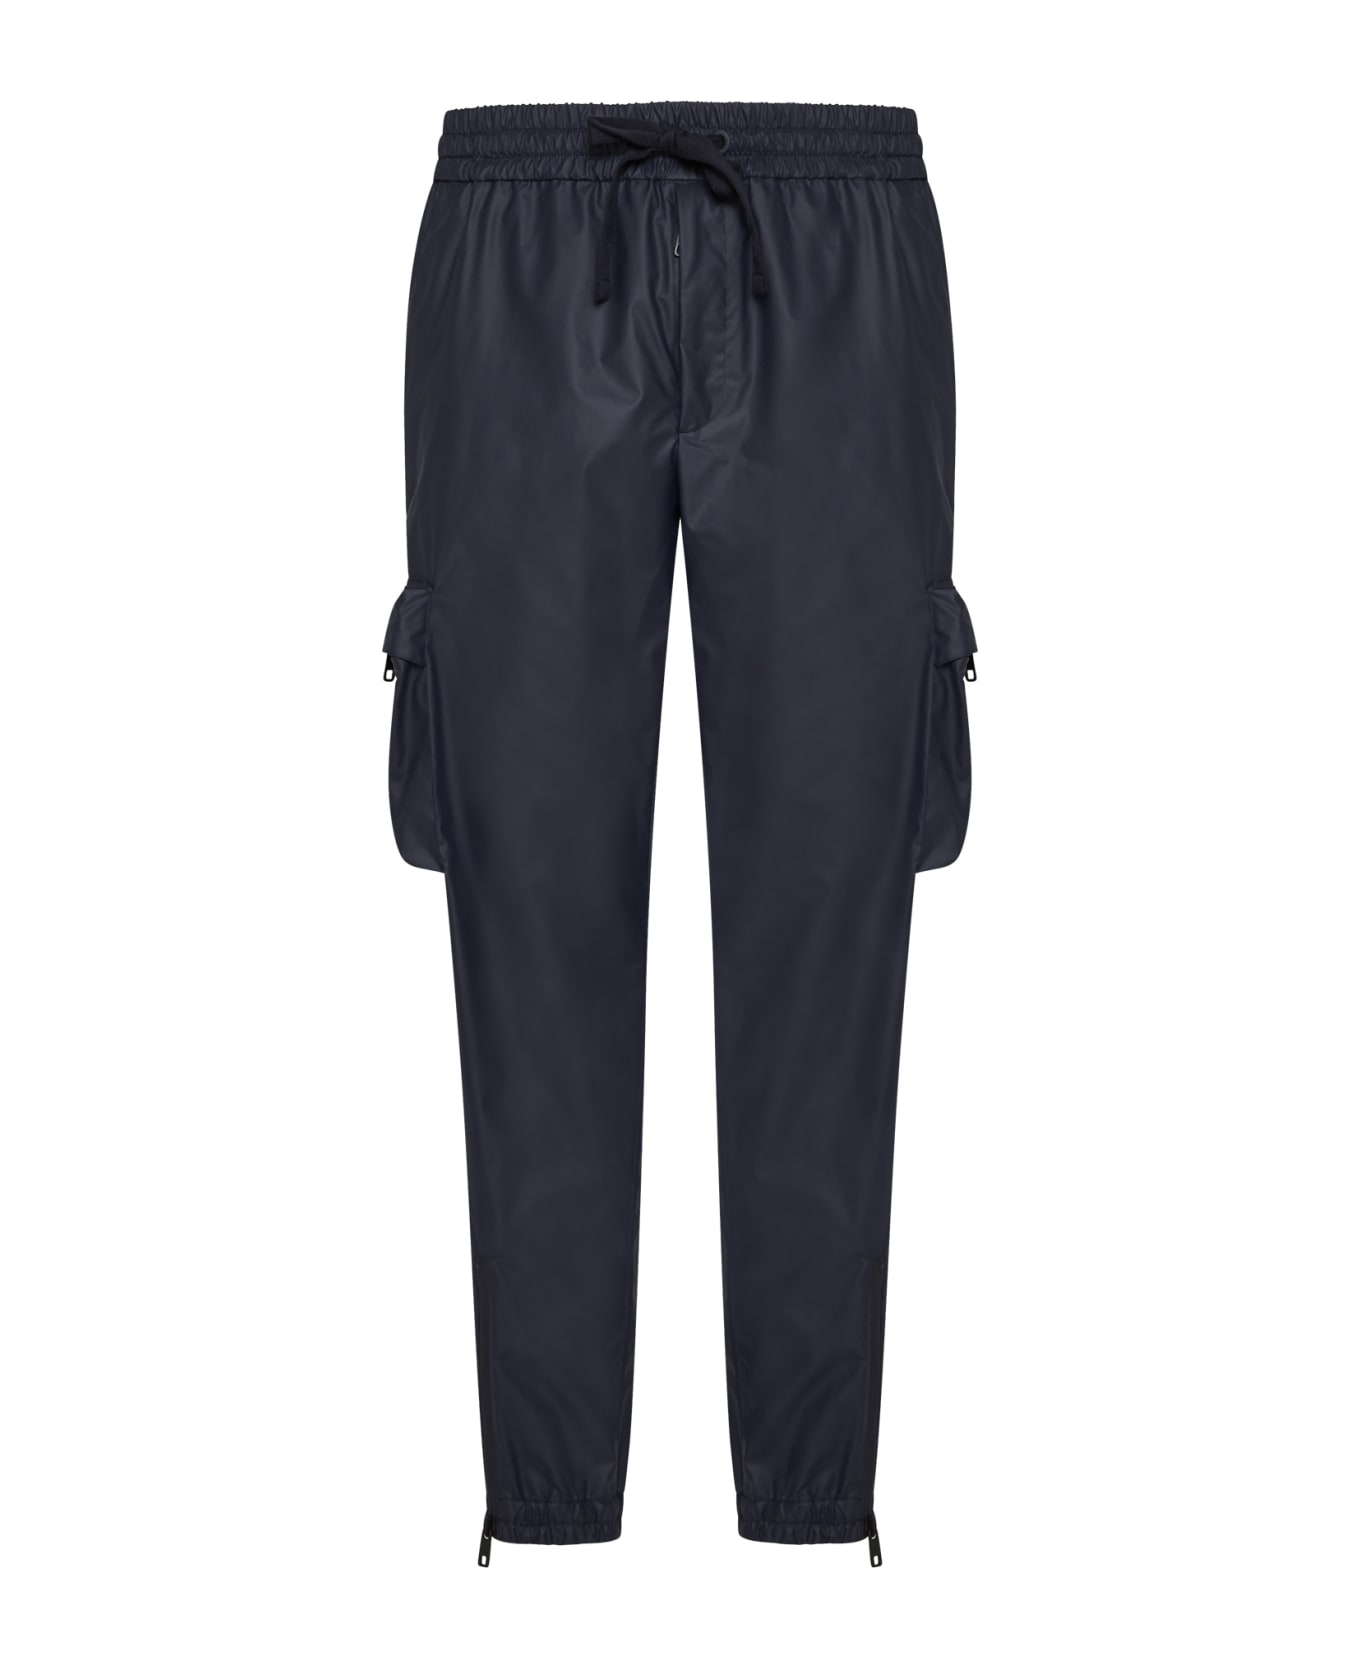 Dolce & Gabbana Pants - Blu scurisimo 1 スウェットパンツ